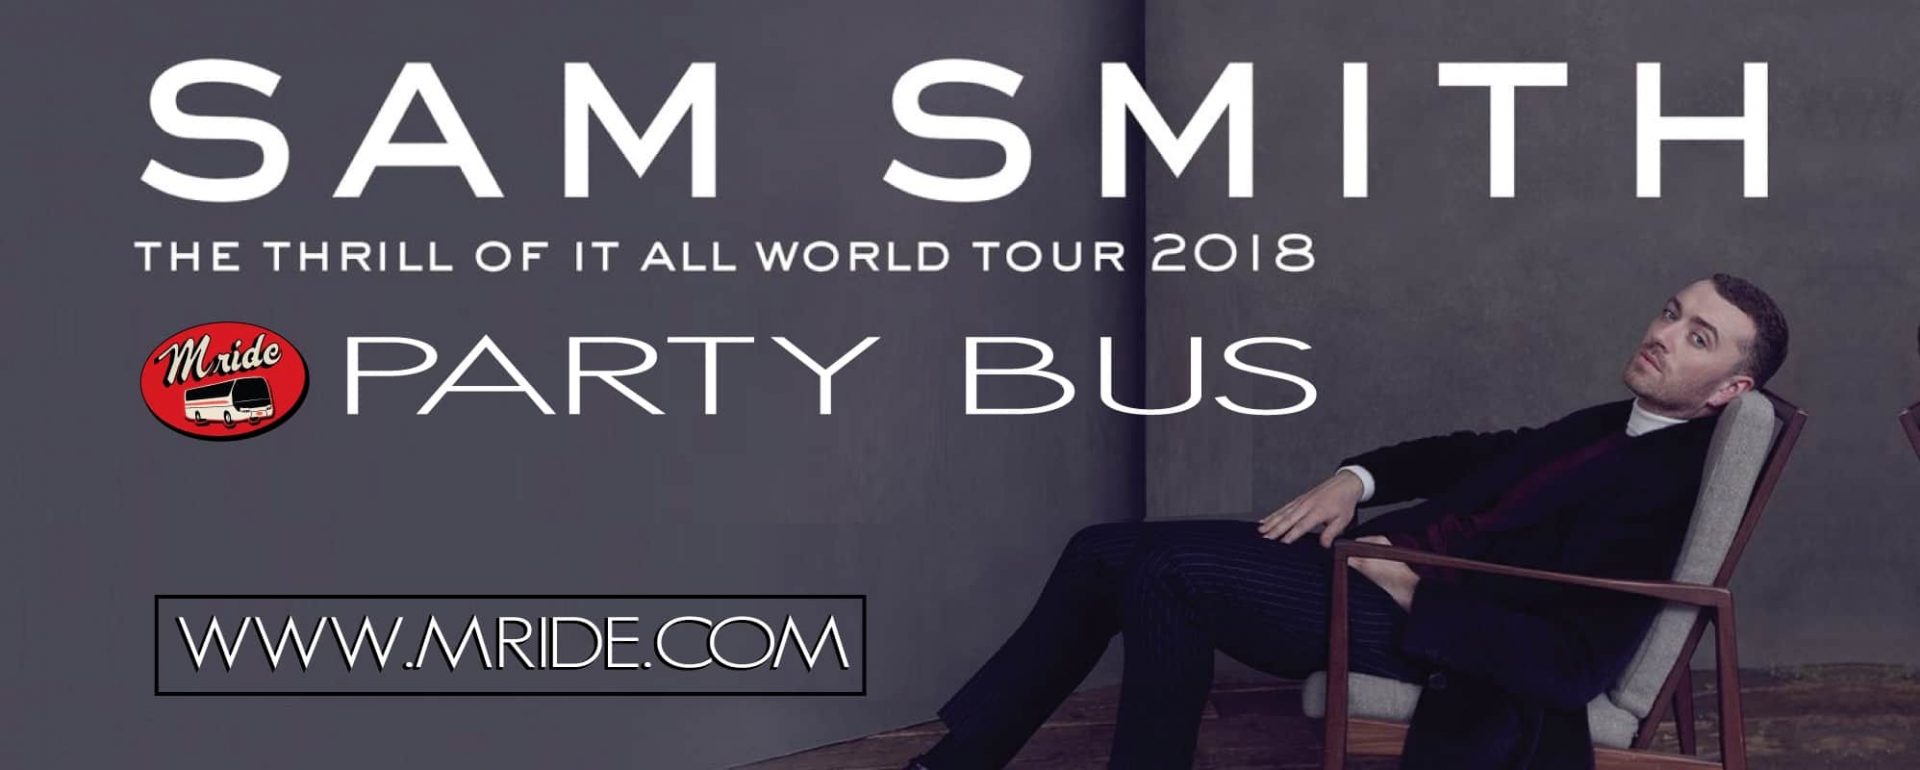 Sam Smith Party Bus